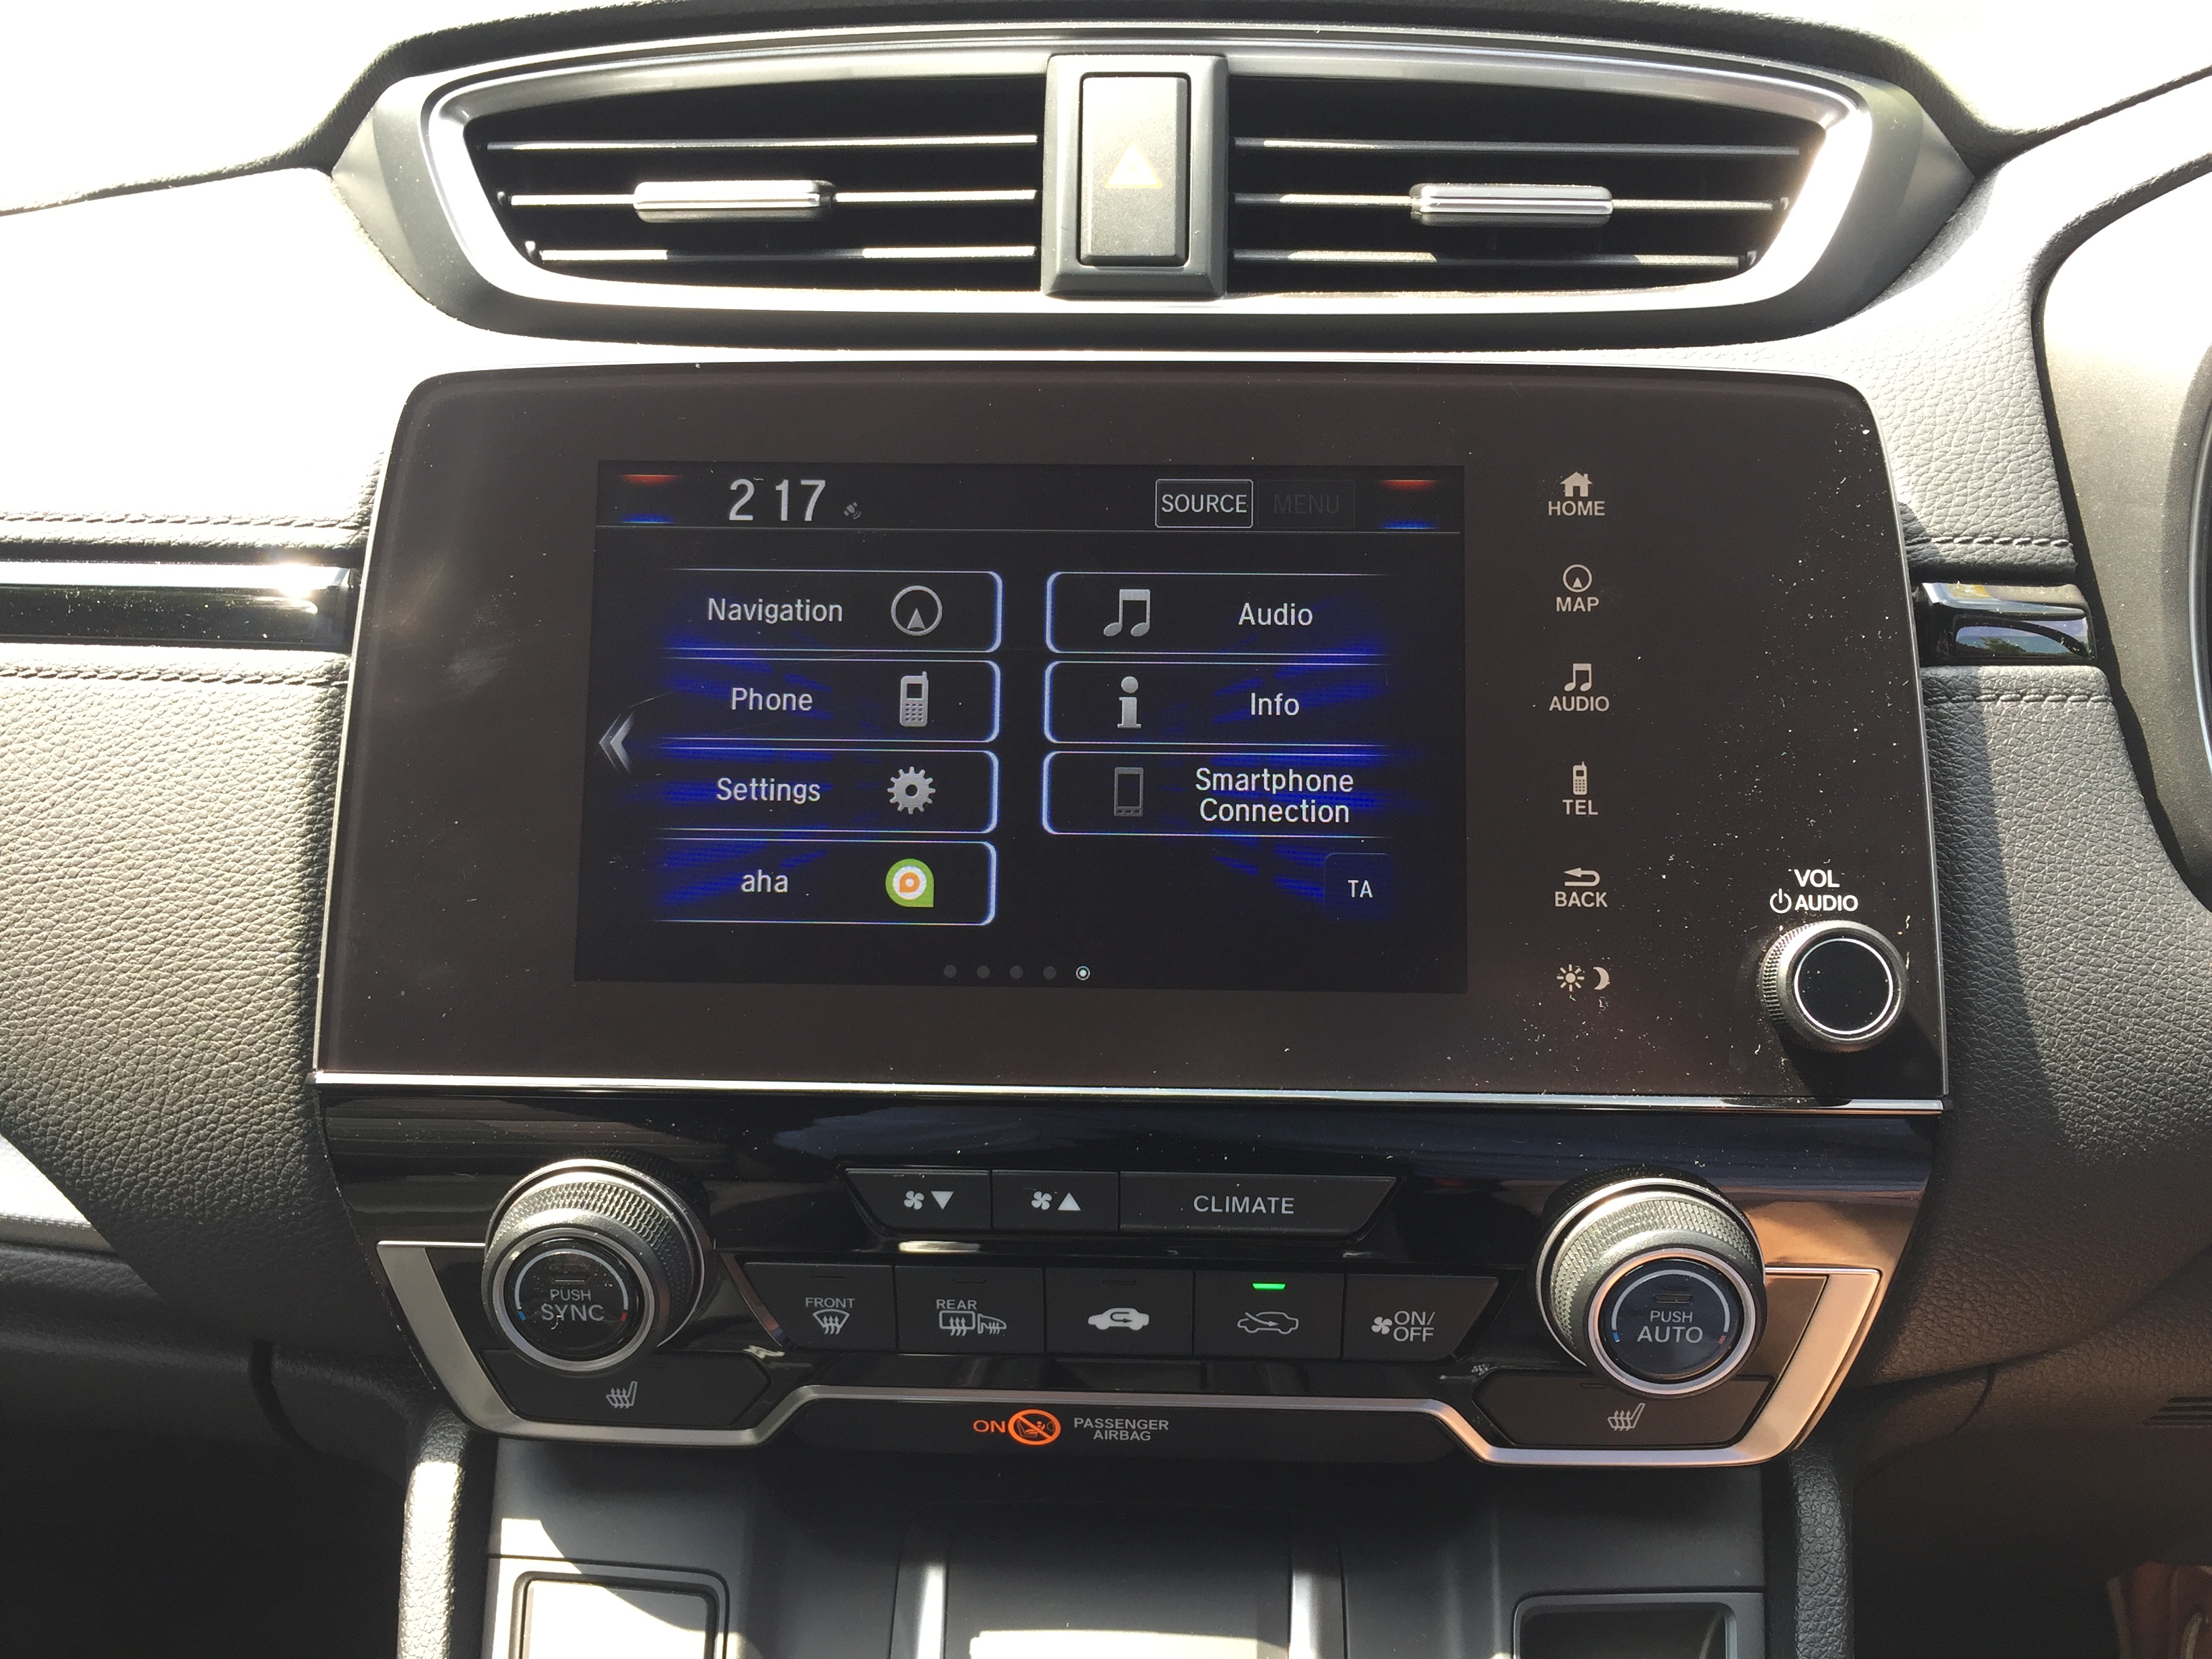 Honda CR-V Hybrid infotainment system review